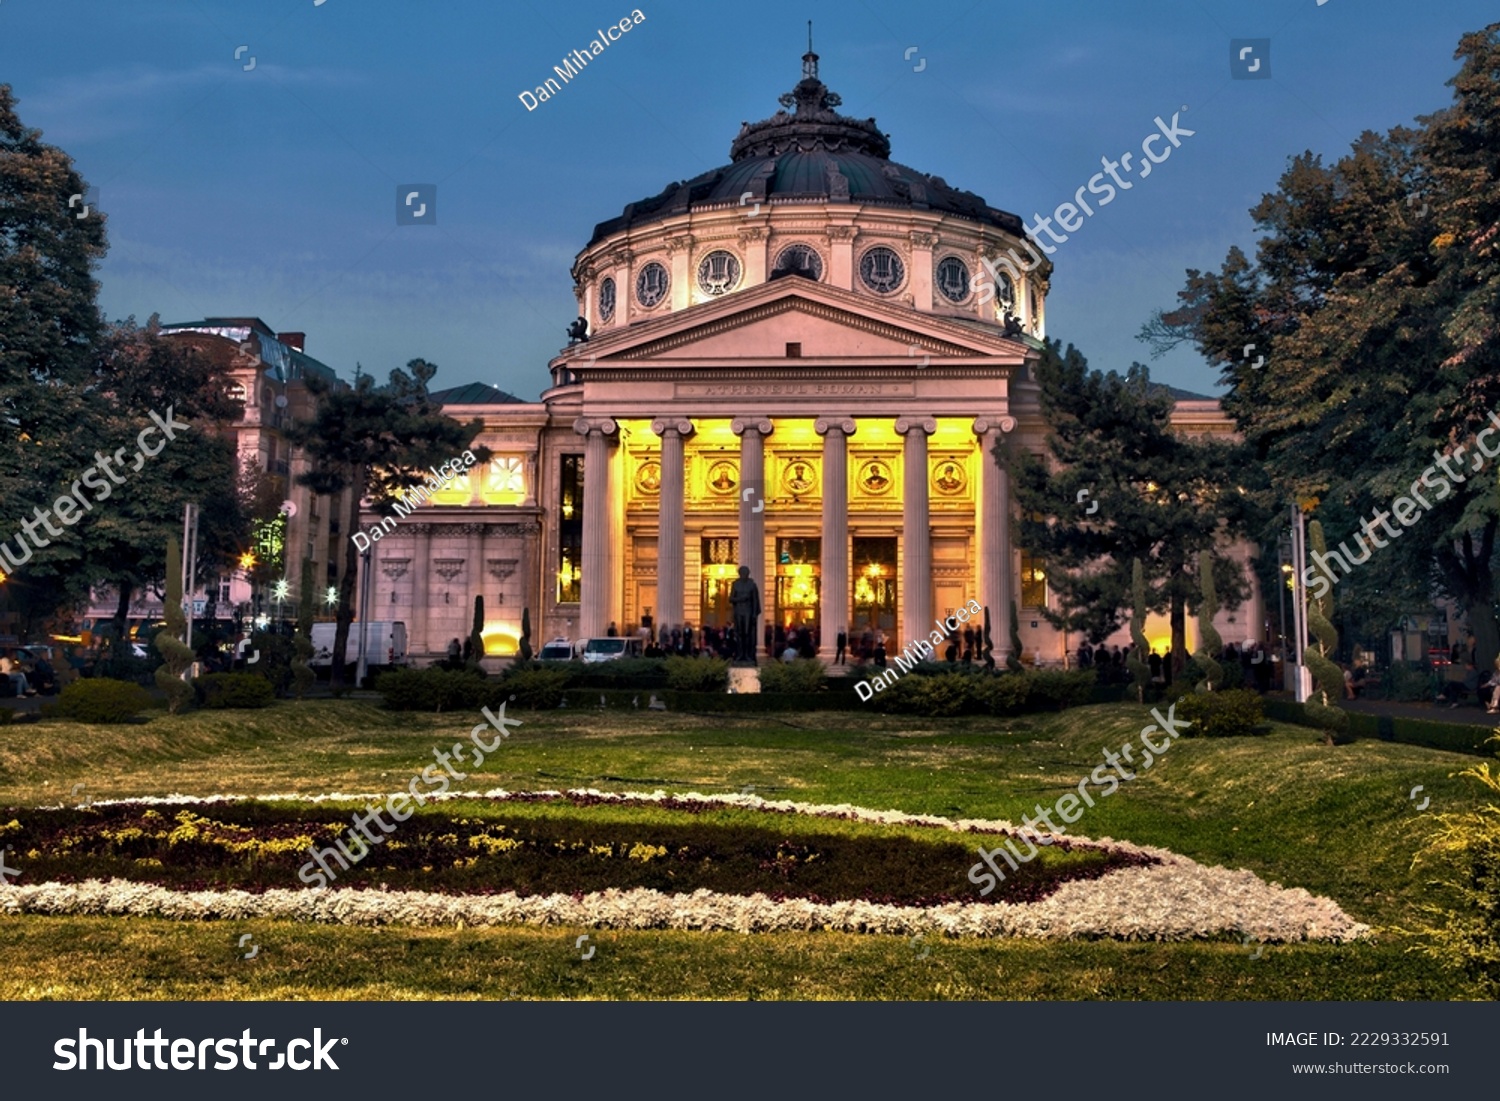 Interesting aspects of Bucharest, Romania. Romanian Athenaeum. #2229332591